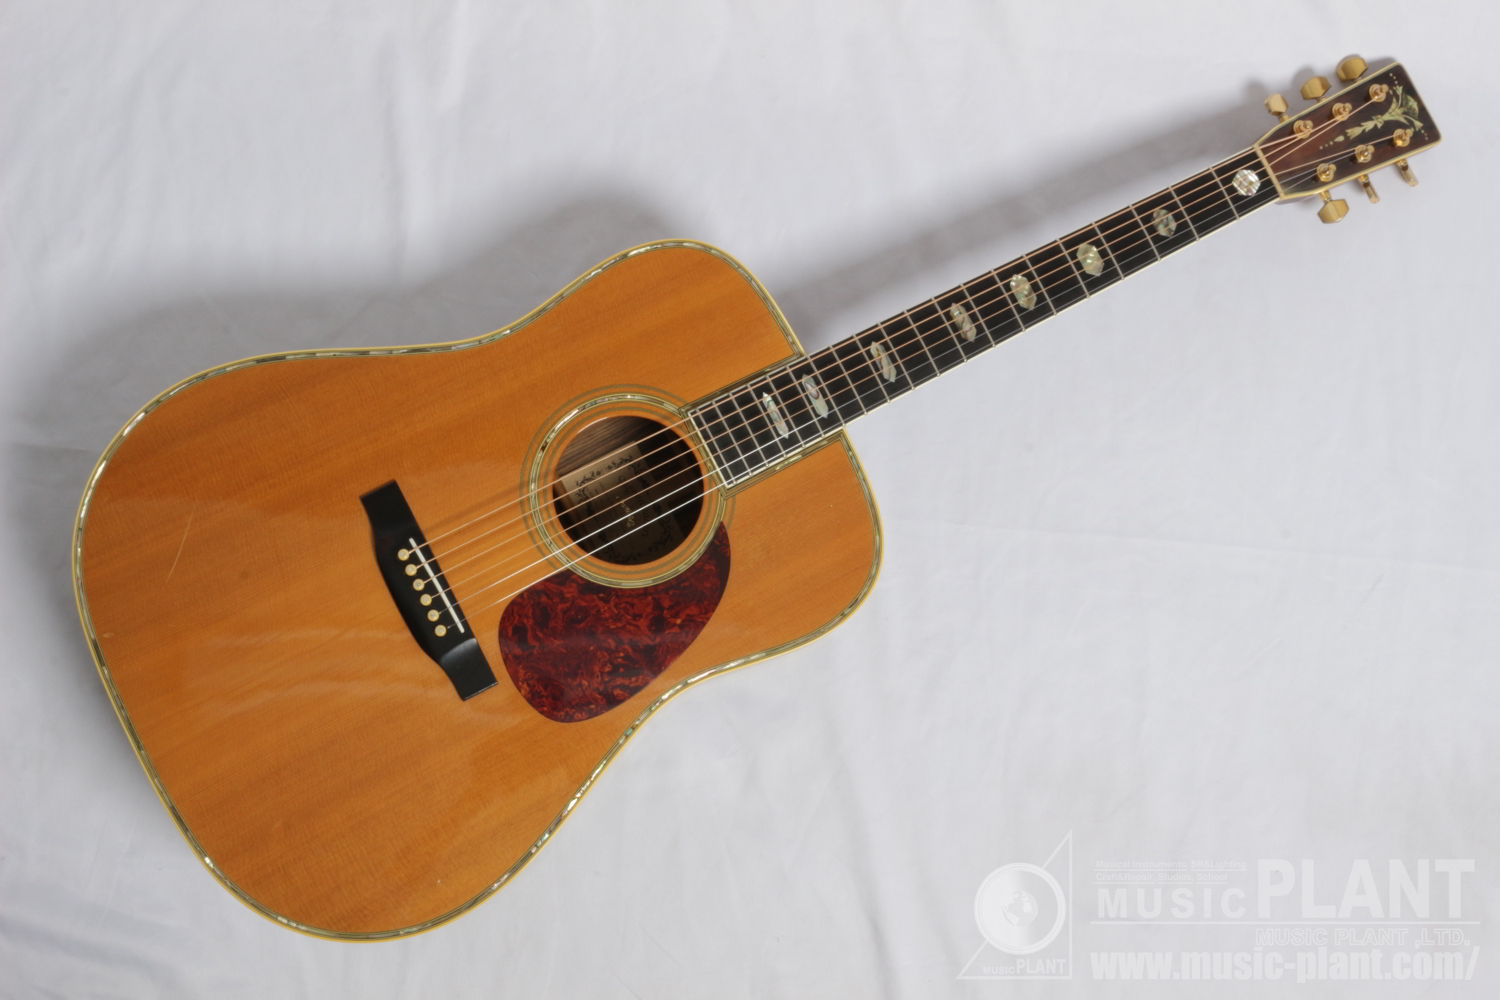 Sigma Guitar by Martin Sd-45J中古品ご売約済みです。あしからずご 